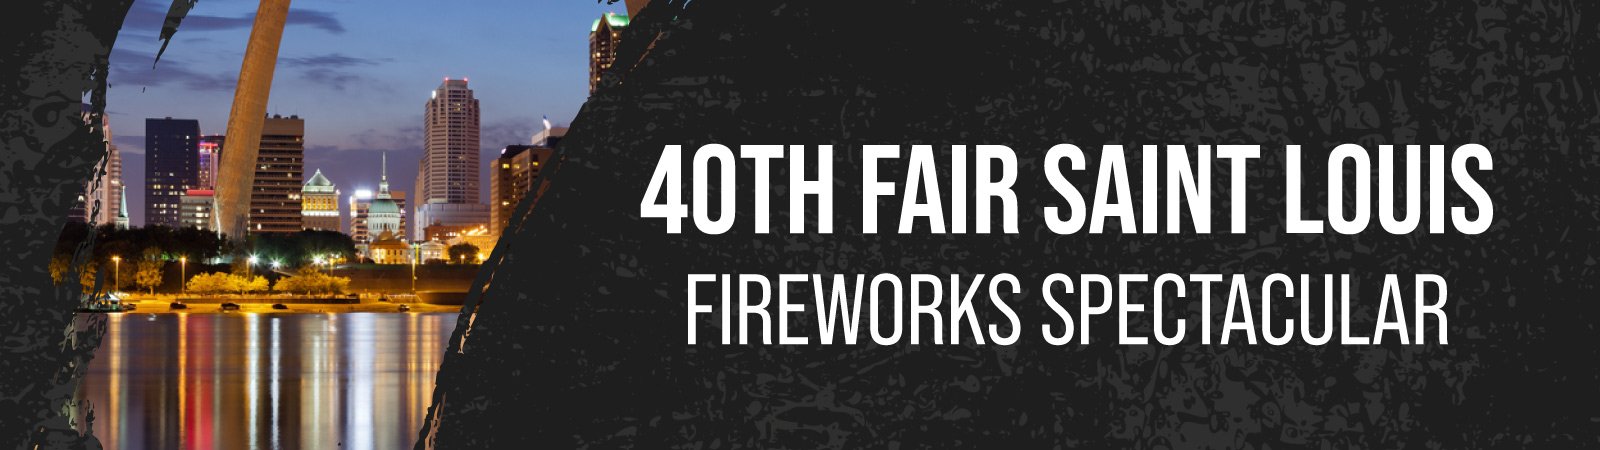 40th Fair Saint Louis’ Fourth of July Fireworks Spectacular